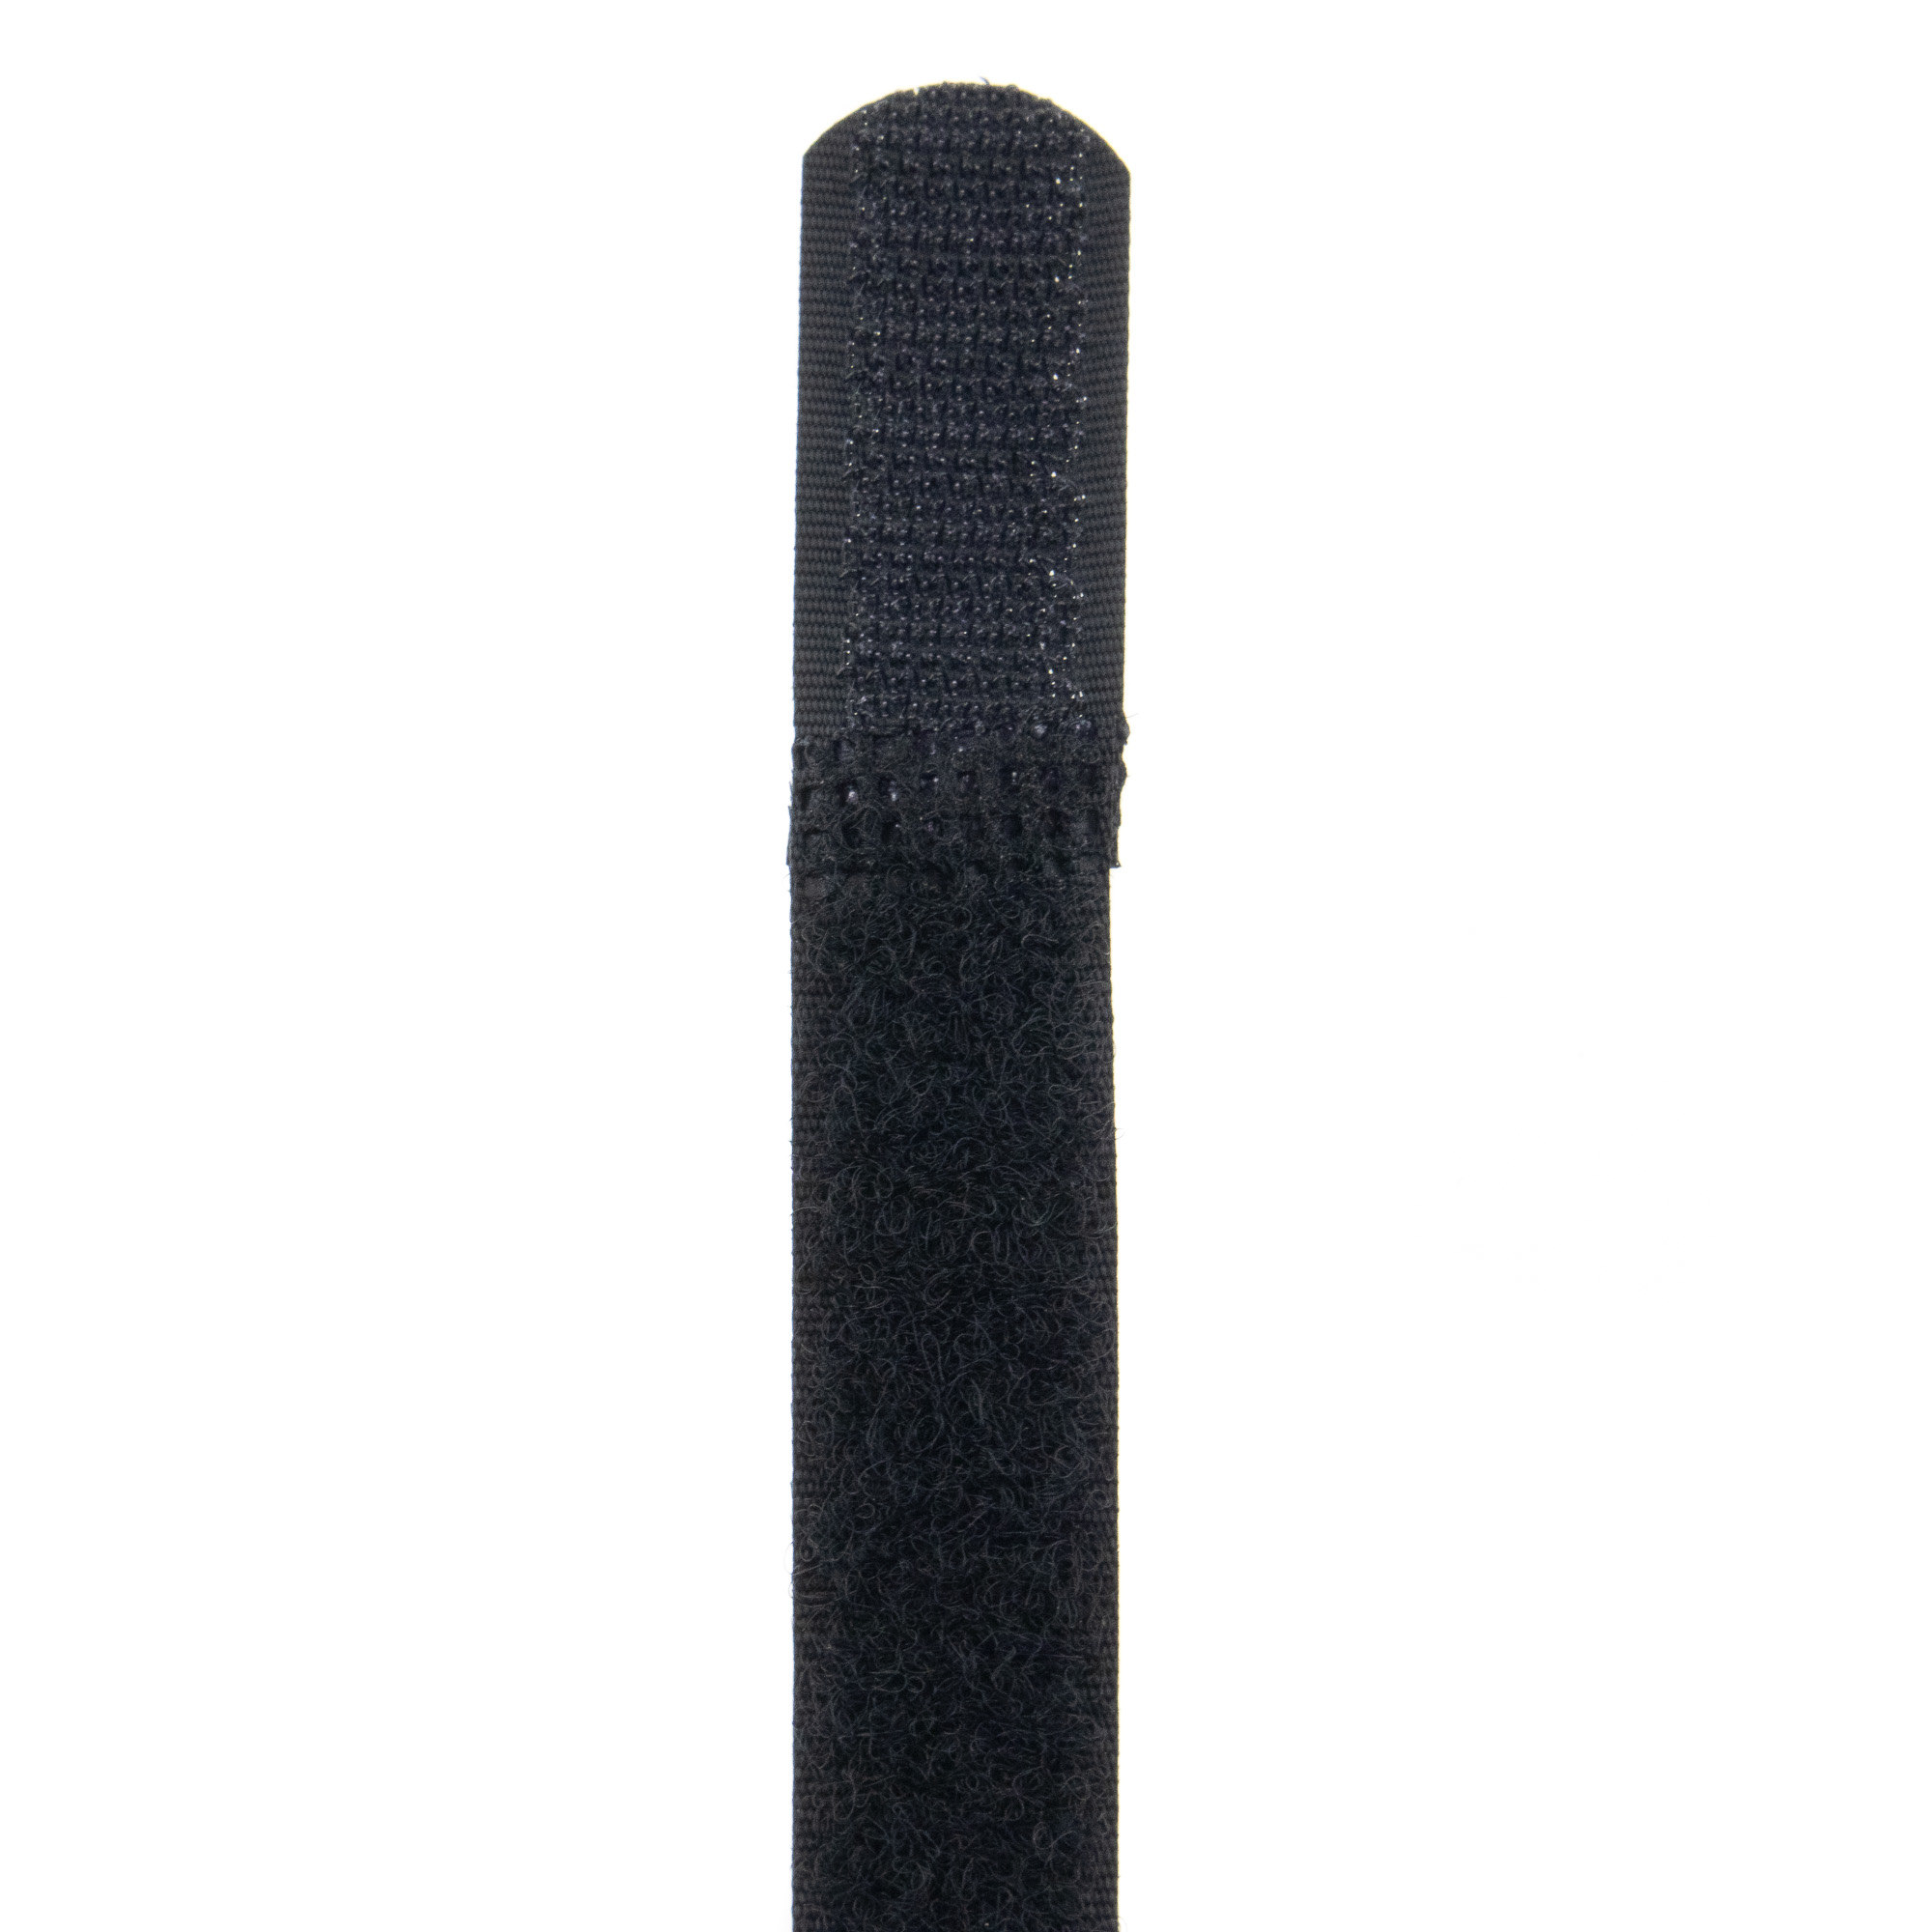 Hook-and-loop strap 150x16, black, 10PCS